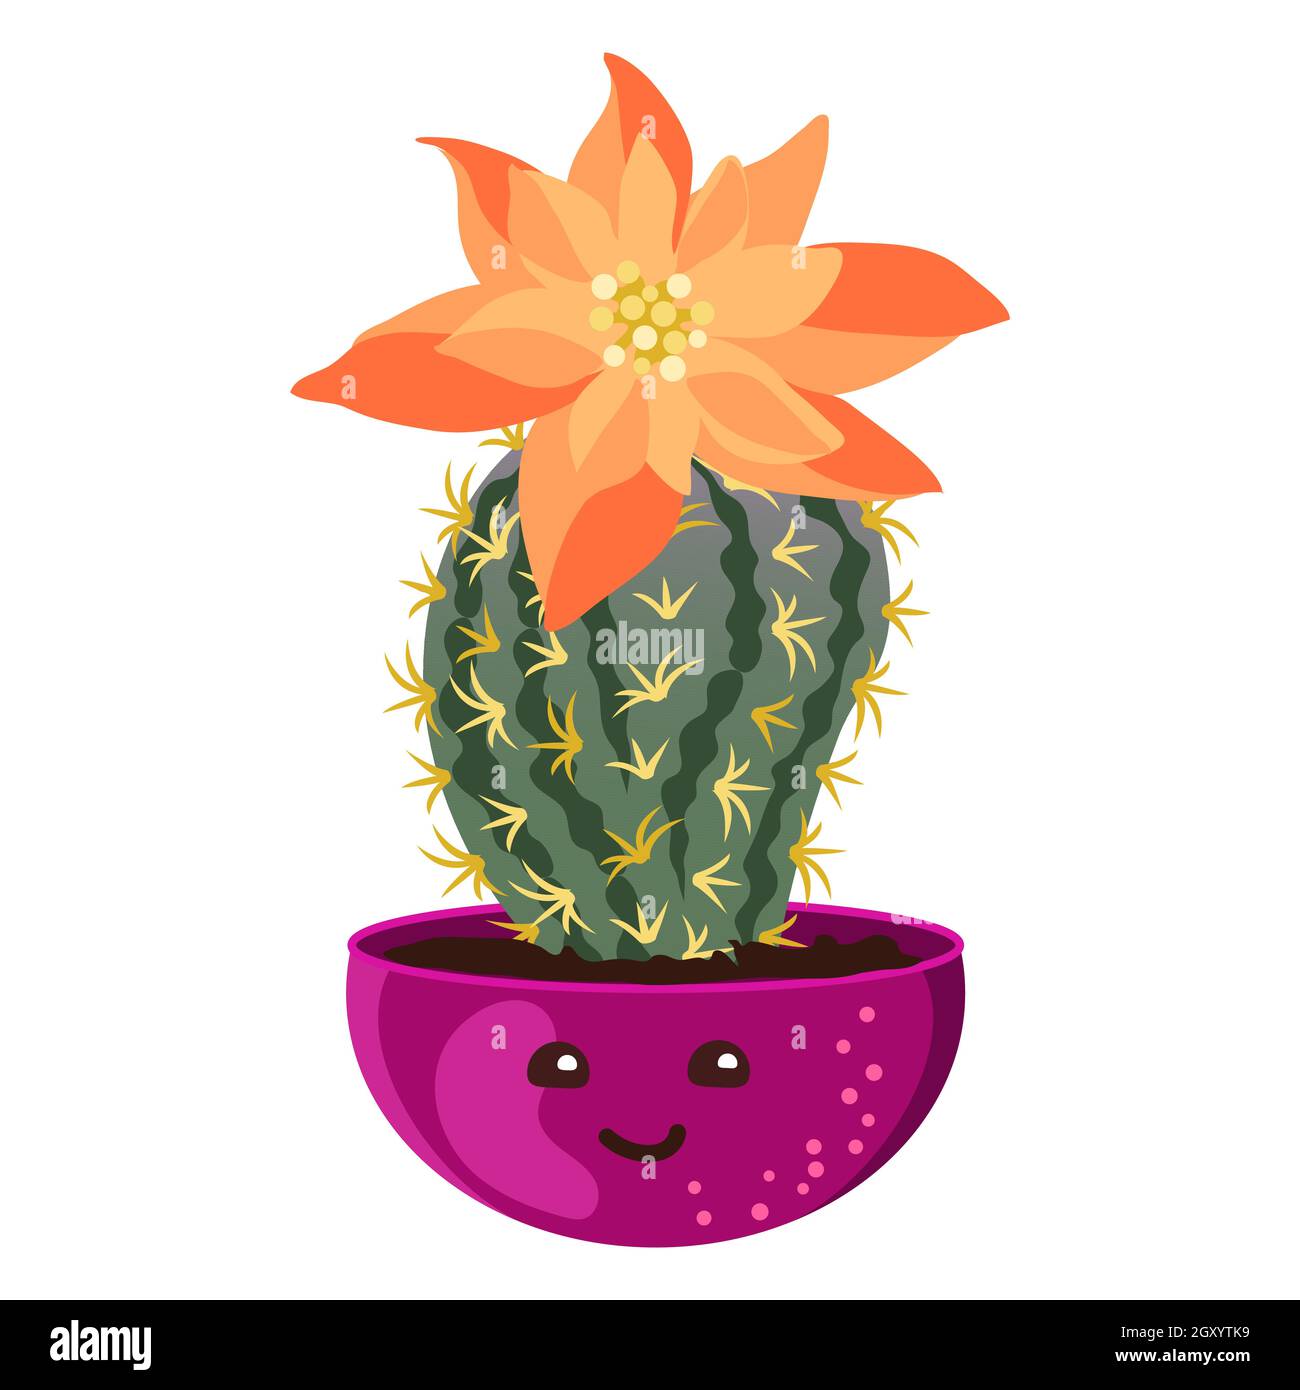 Cute kawaii cactus in pots. Cartoon style. Vector images on a